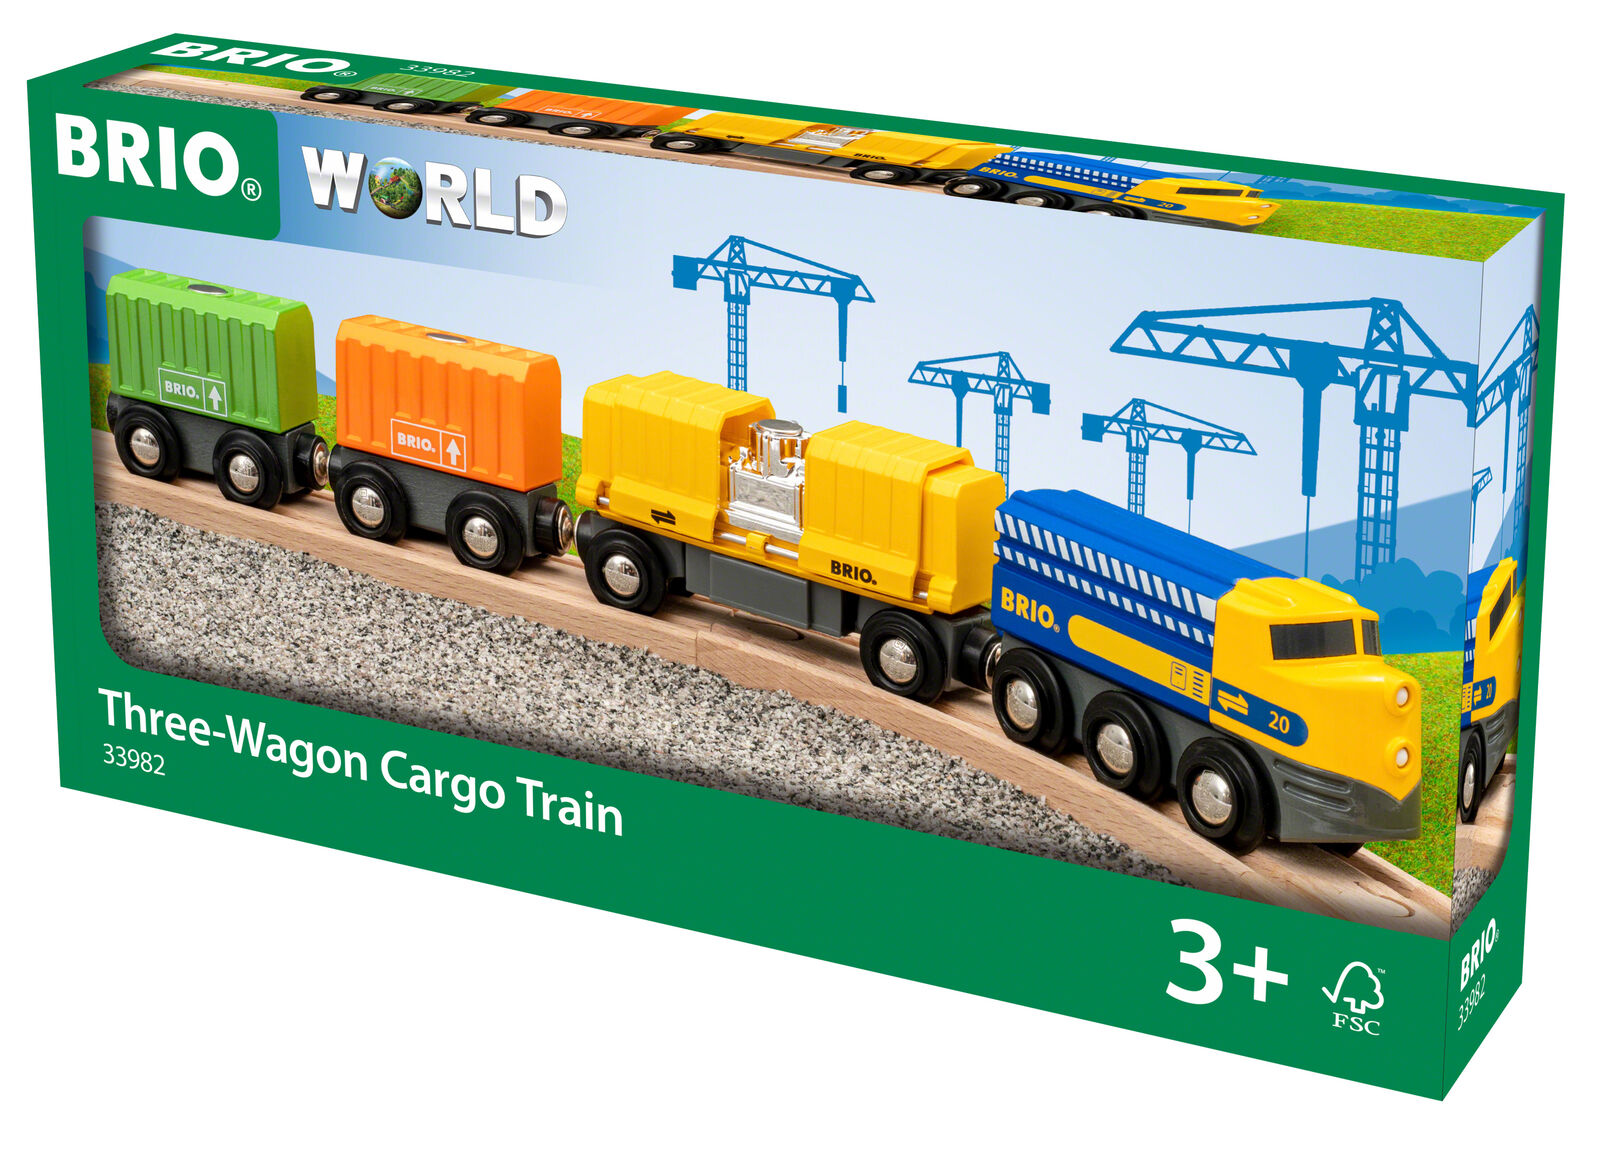 33982 BRIO Three Wagon Cargo Train Wooden Plastic Railway Magnetic Age 3 Years+